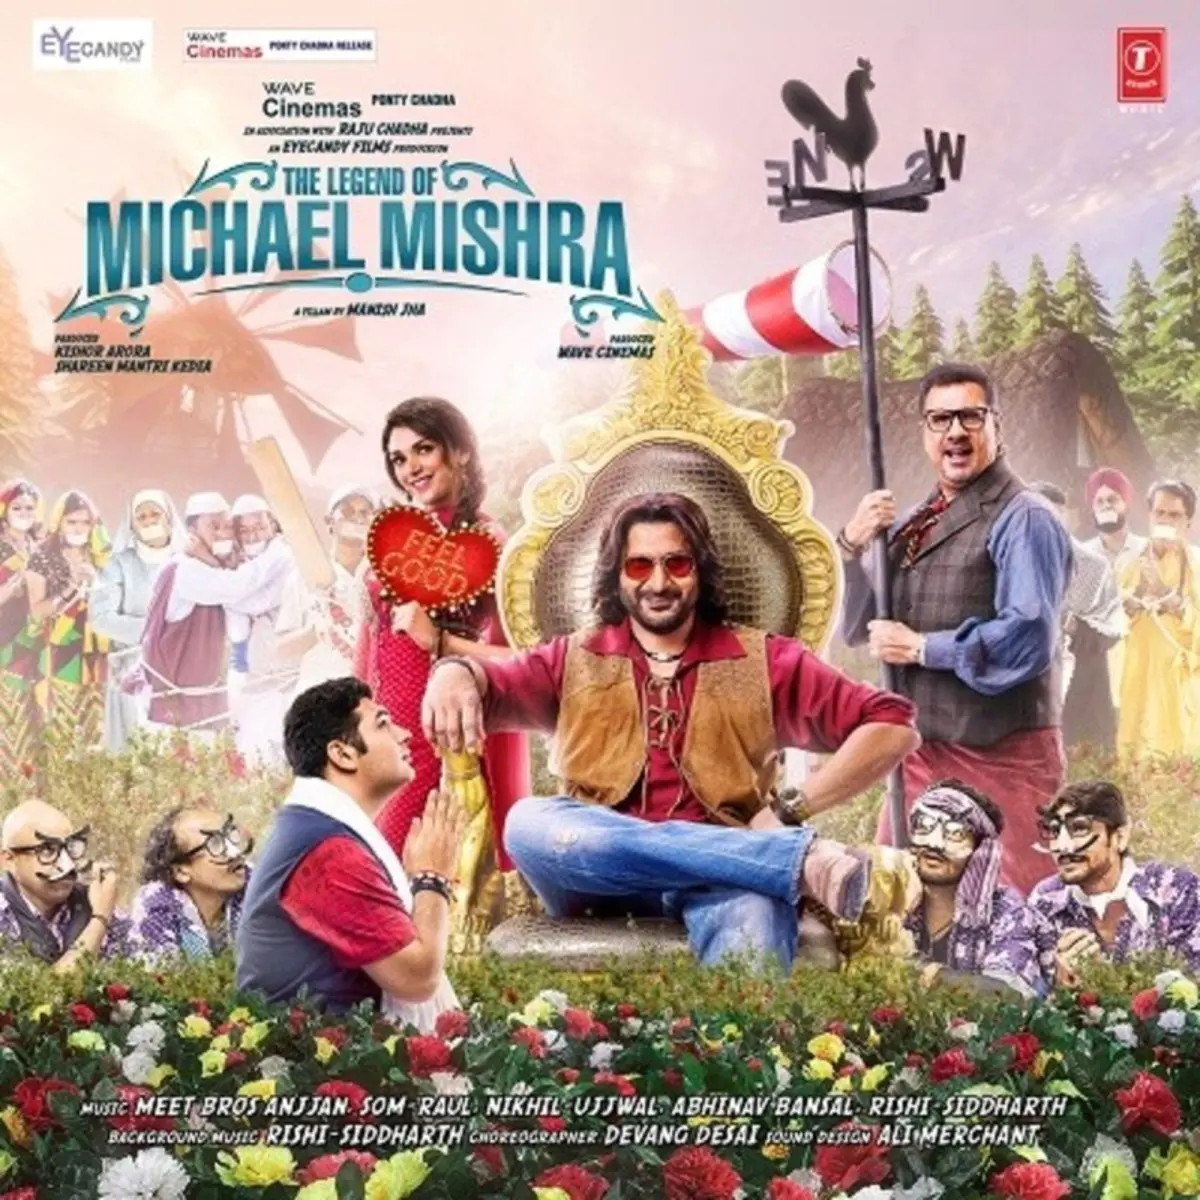 Luv Letter Lyrics In Hindi The Legend Of Michael Mishra Luv Letter Song Lyrics In English Free Online On Gaana Com